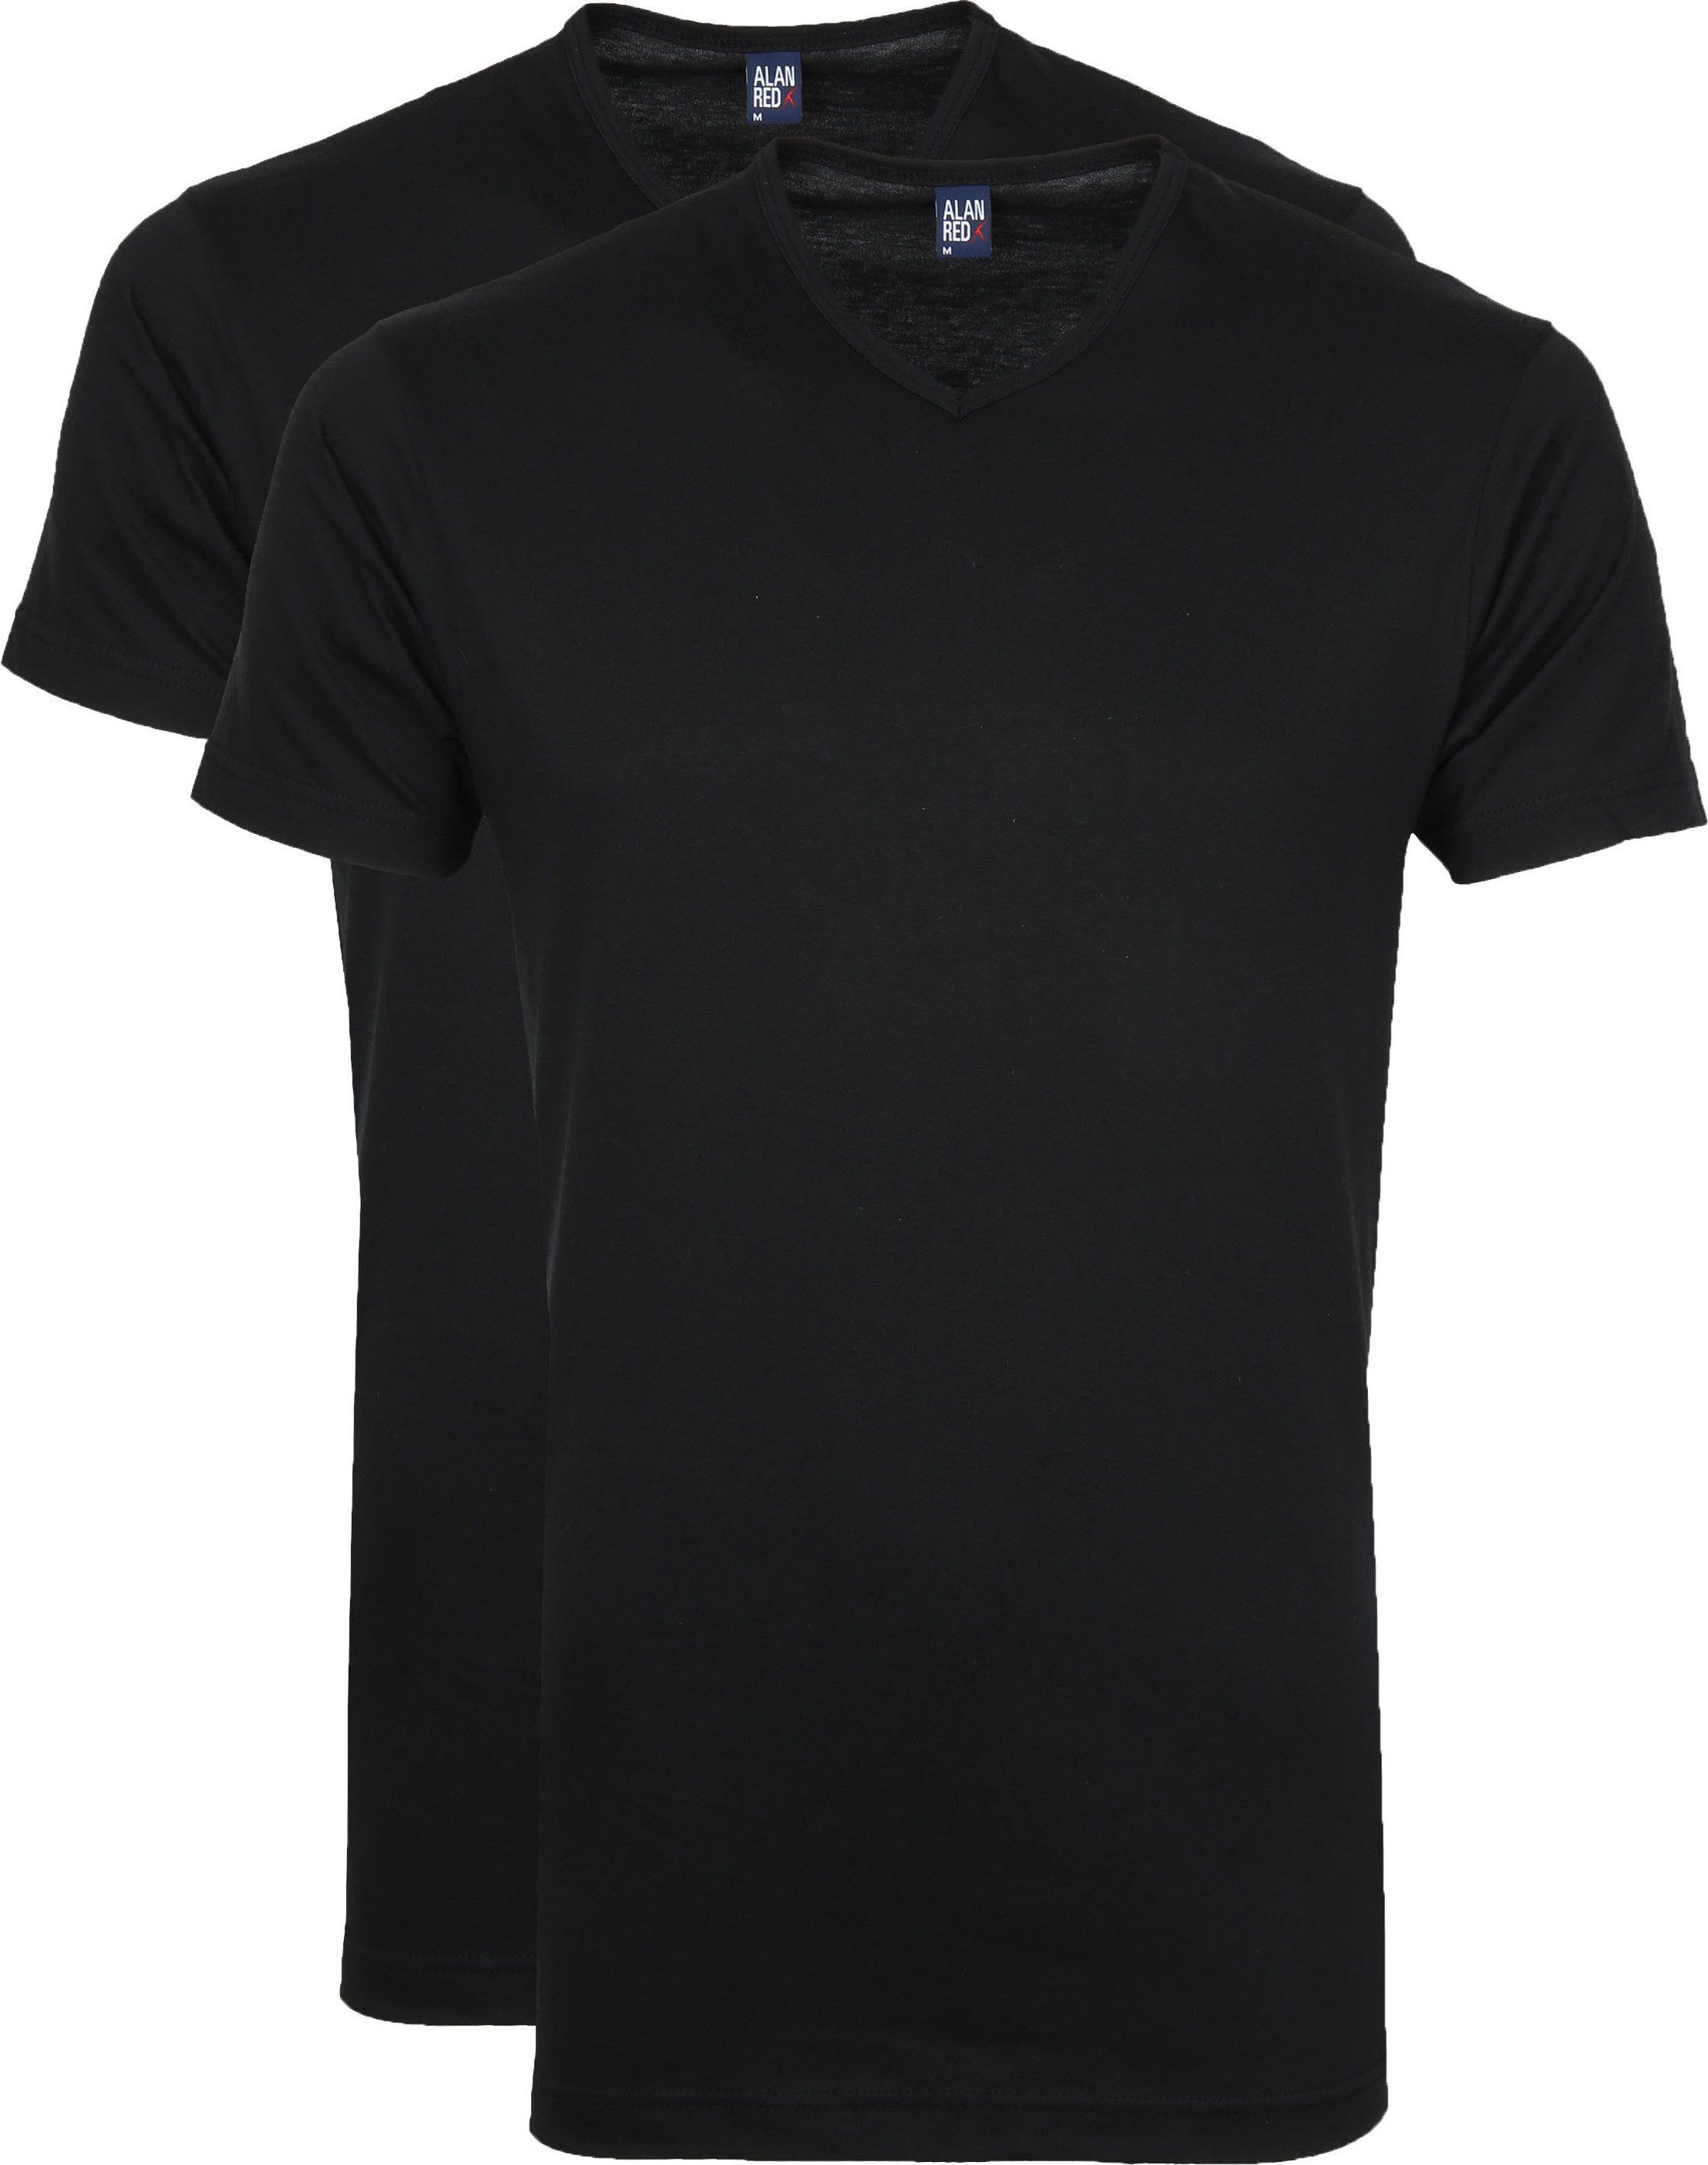 Alan Red T-Shirt V-Neck Vermont (2pack) Black size M